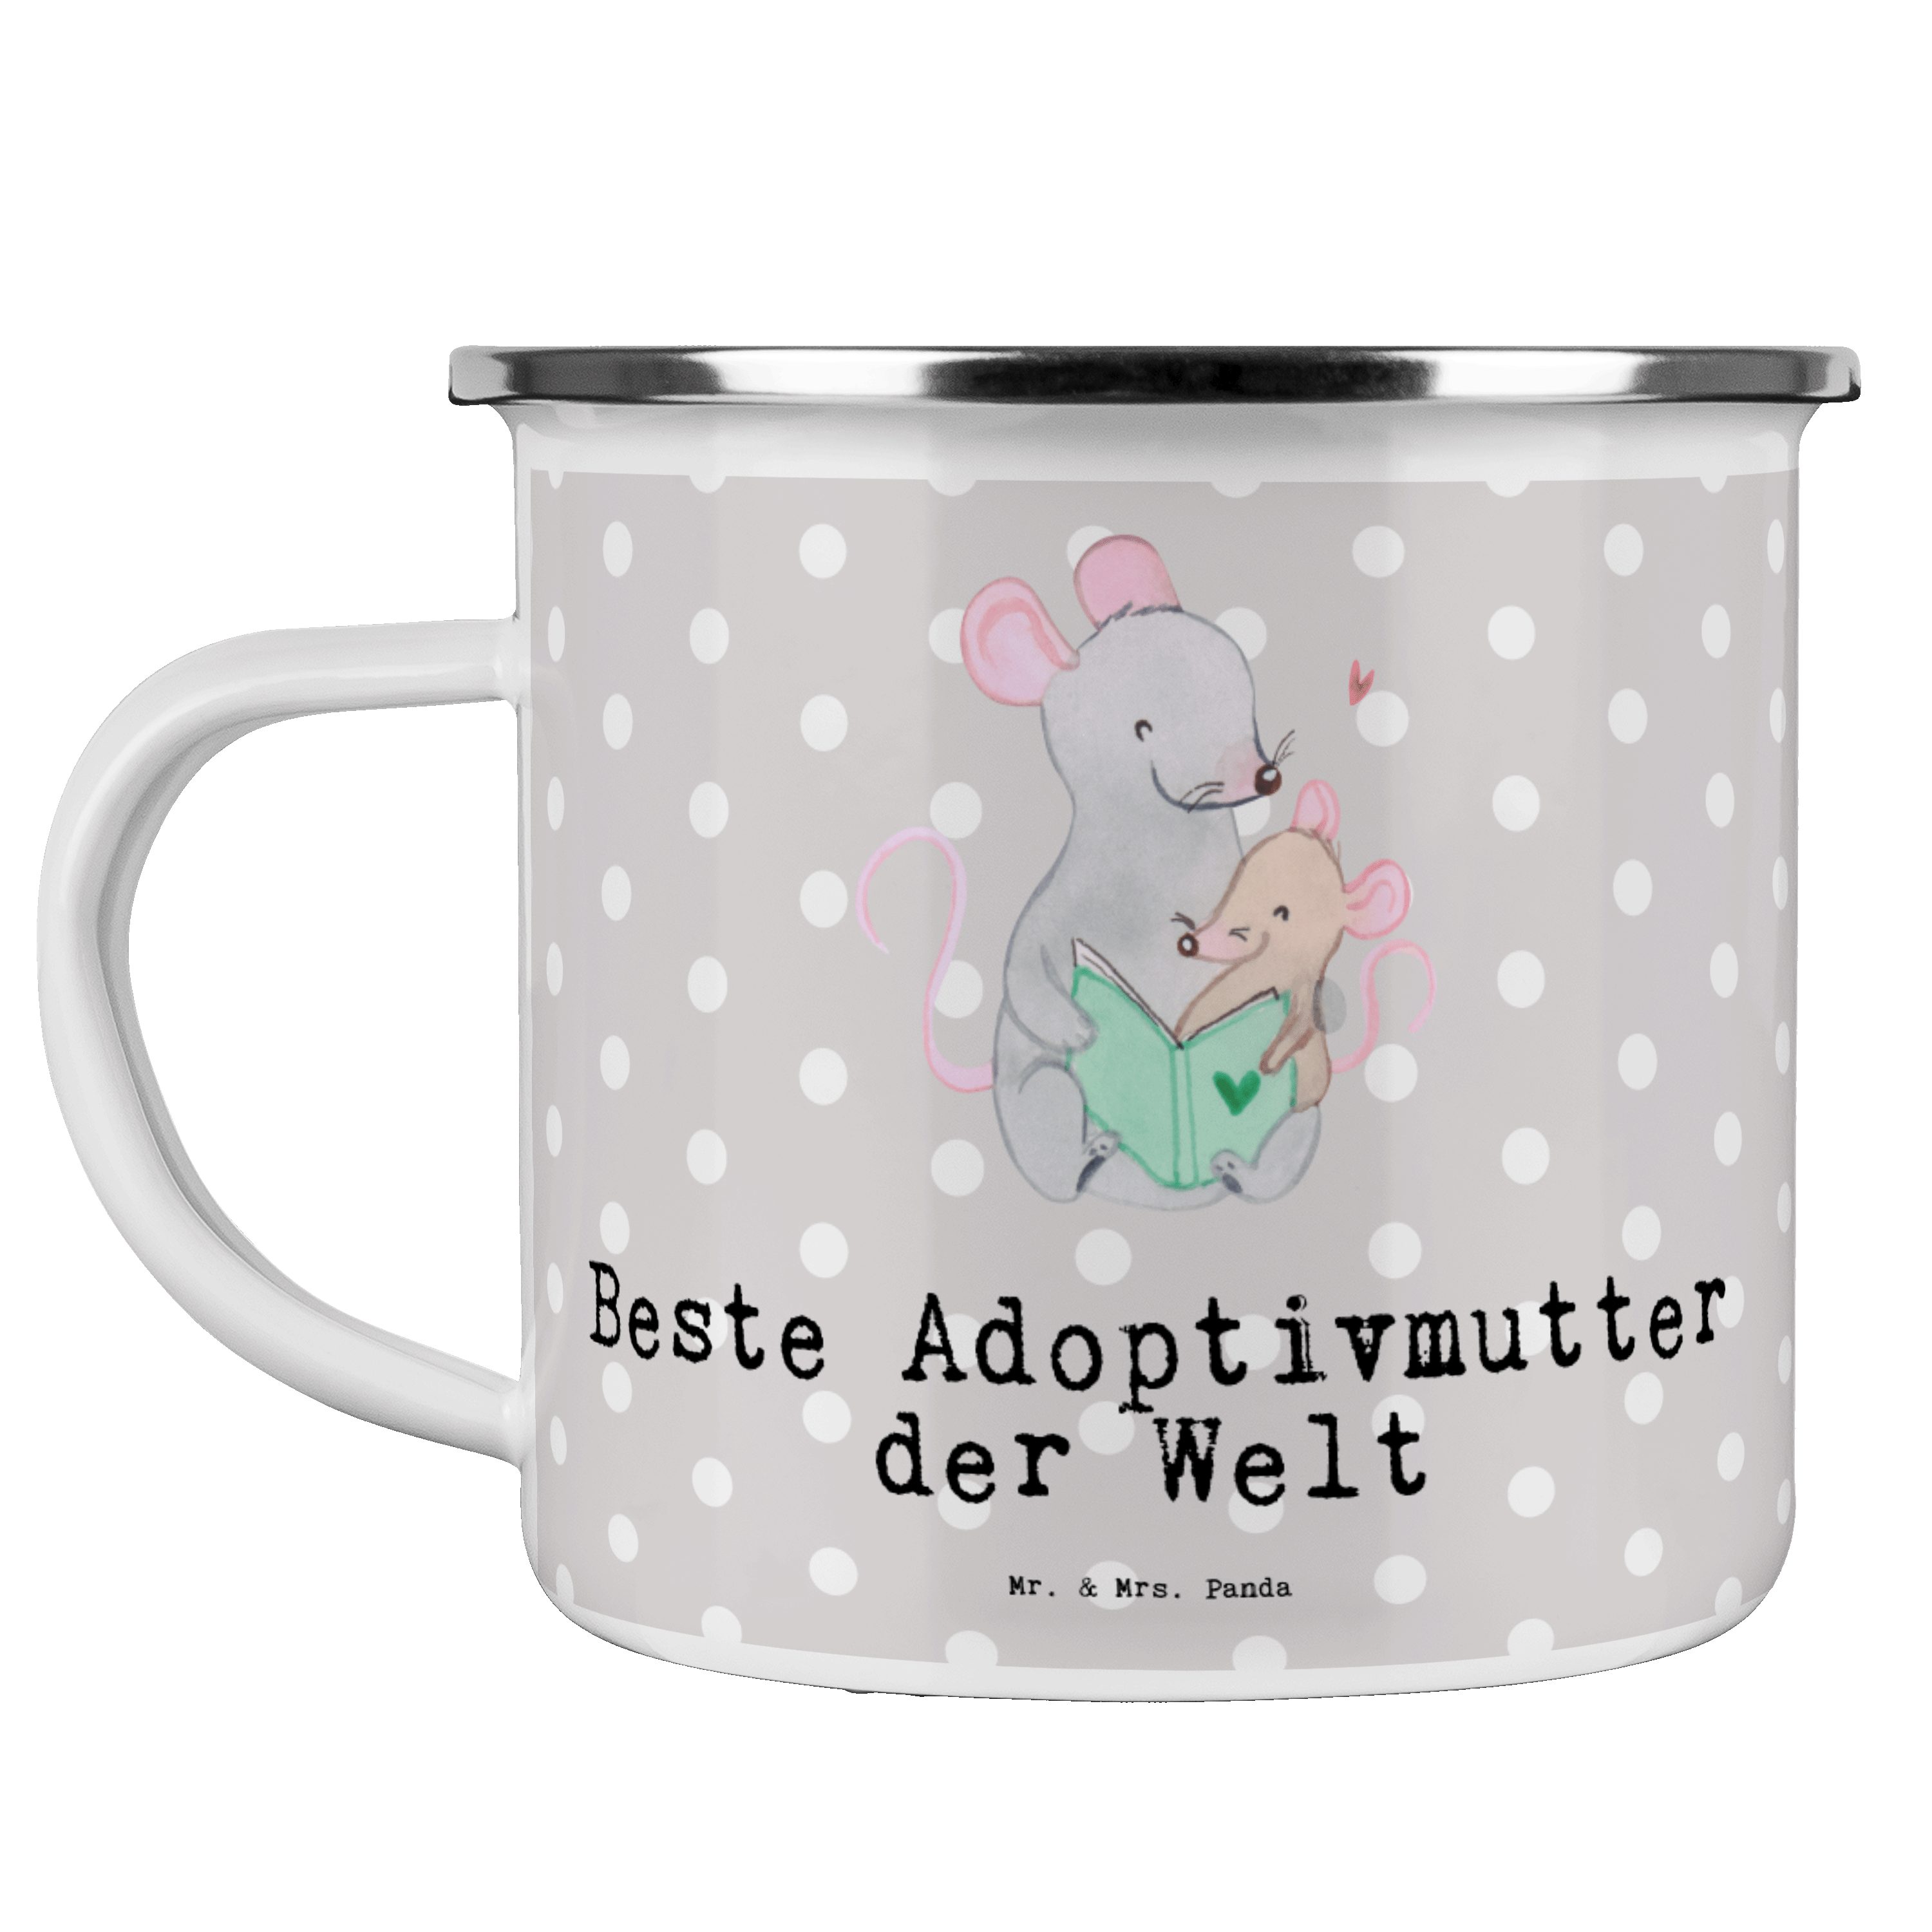 Mr. & Mrs. Panda Becher Maus Beste Adoptivmutter der Welt - Grau Pastell - Geschenk, Adoptivm, Emaille